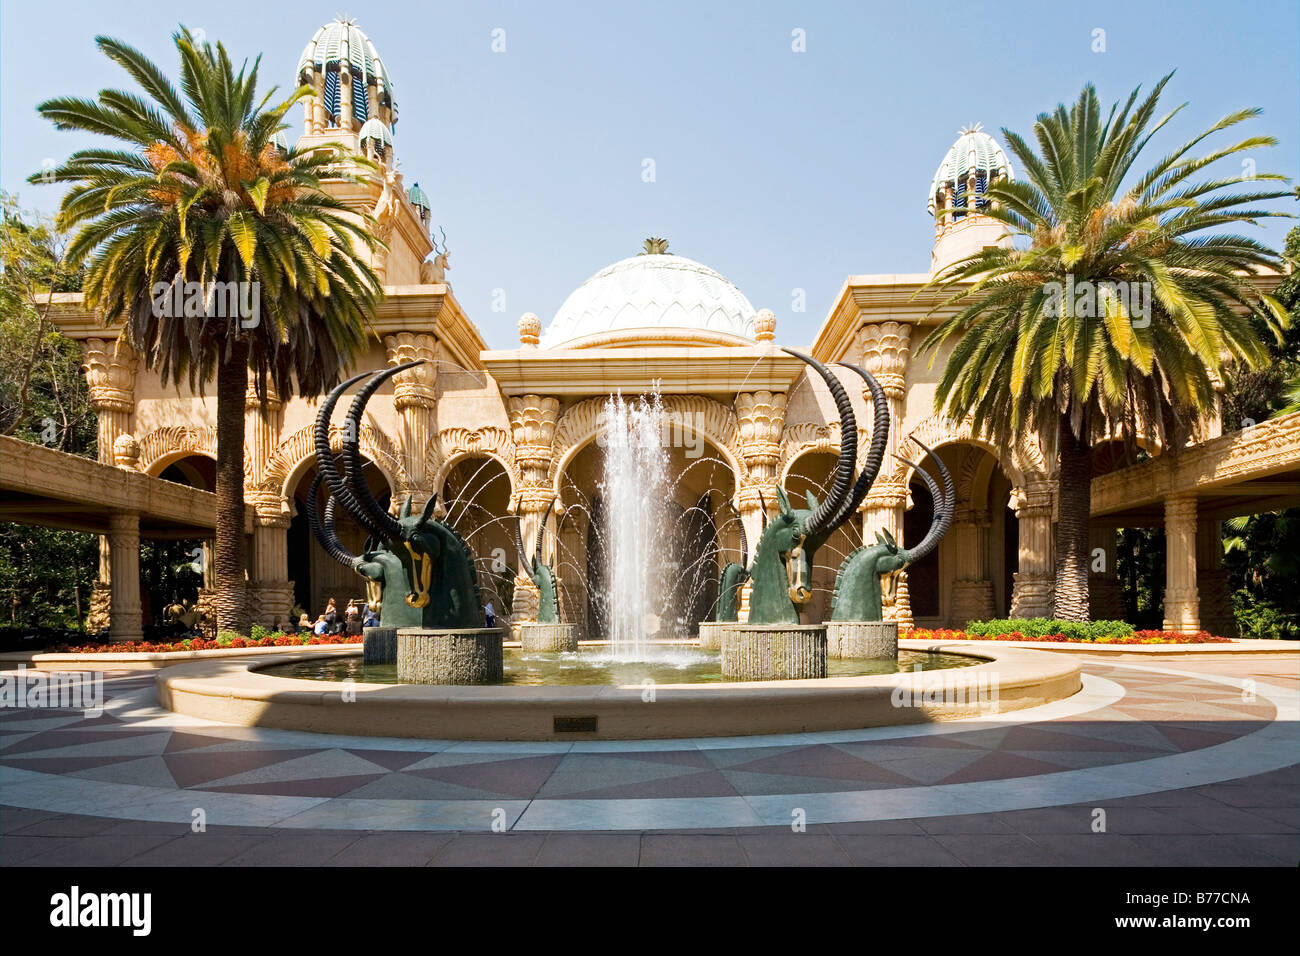 Sable Fontana ingresso, Città perduta, Sun City, in Sudafrica, Africa Foto Stock